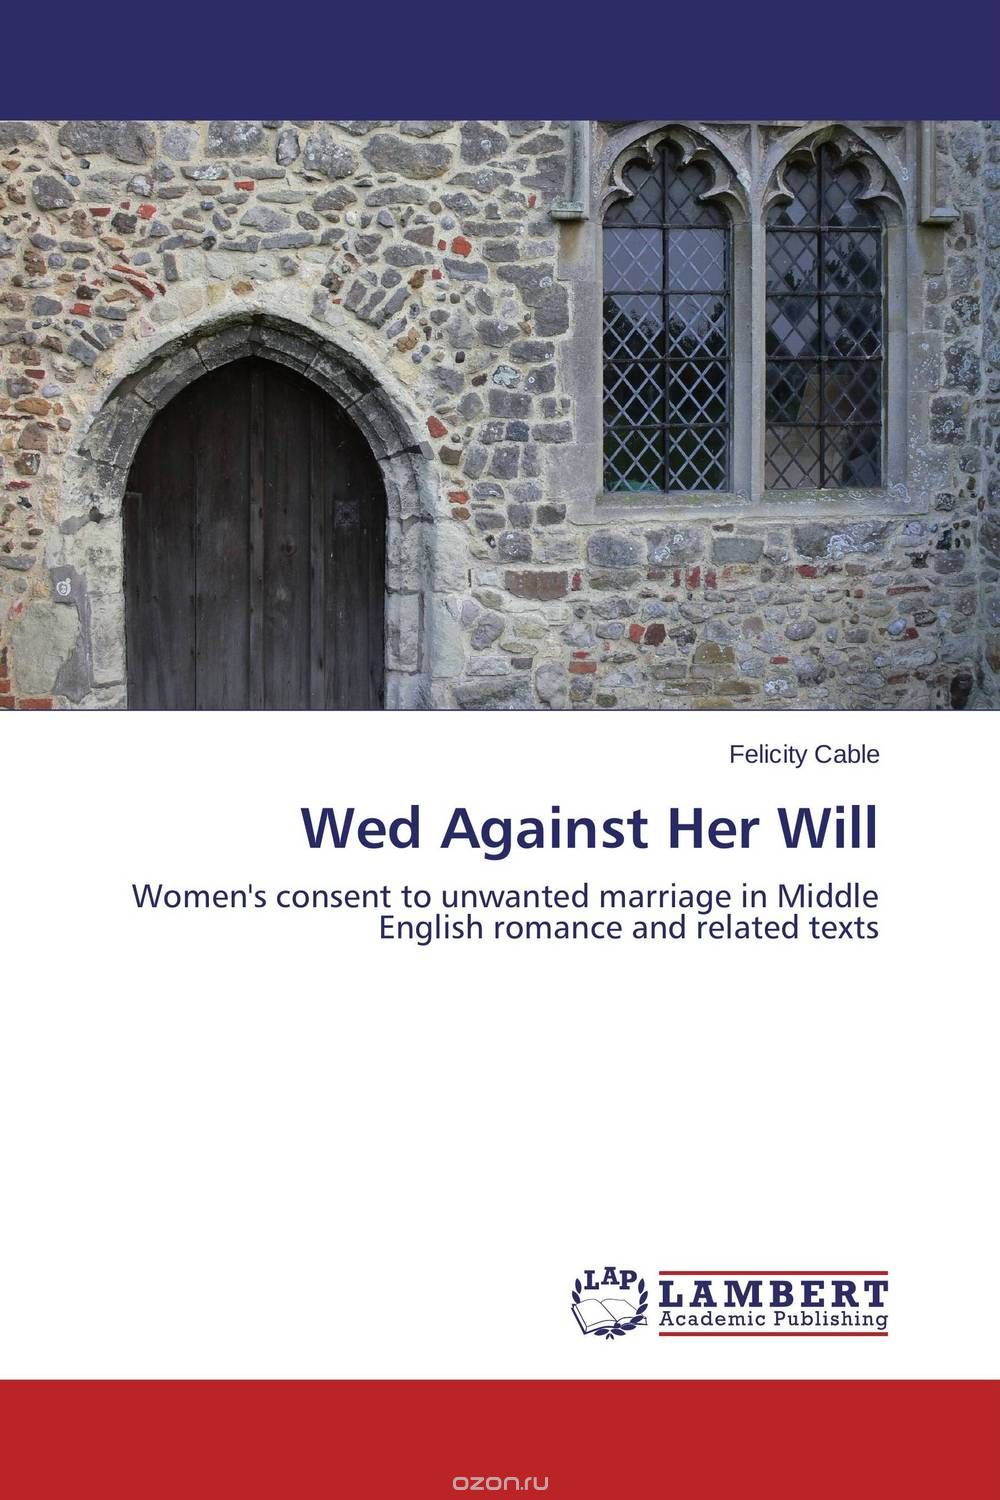 Скачать книгу "Wed Against Her Will"